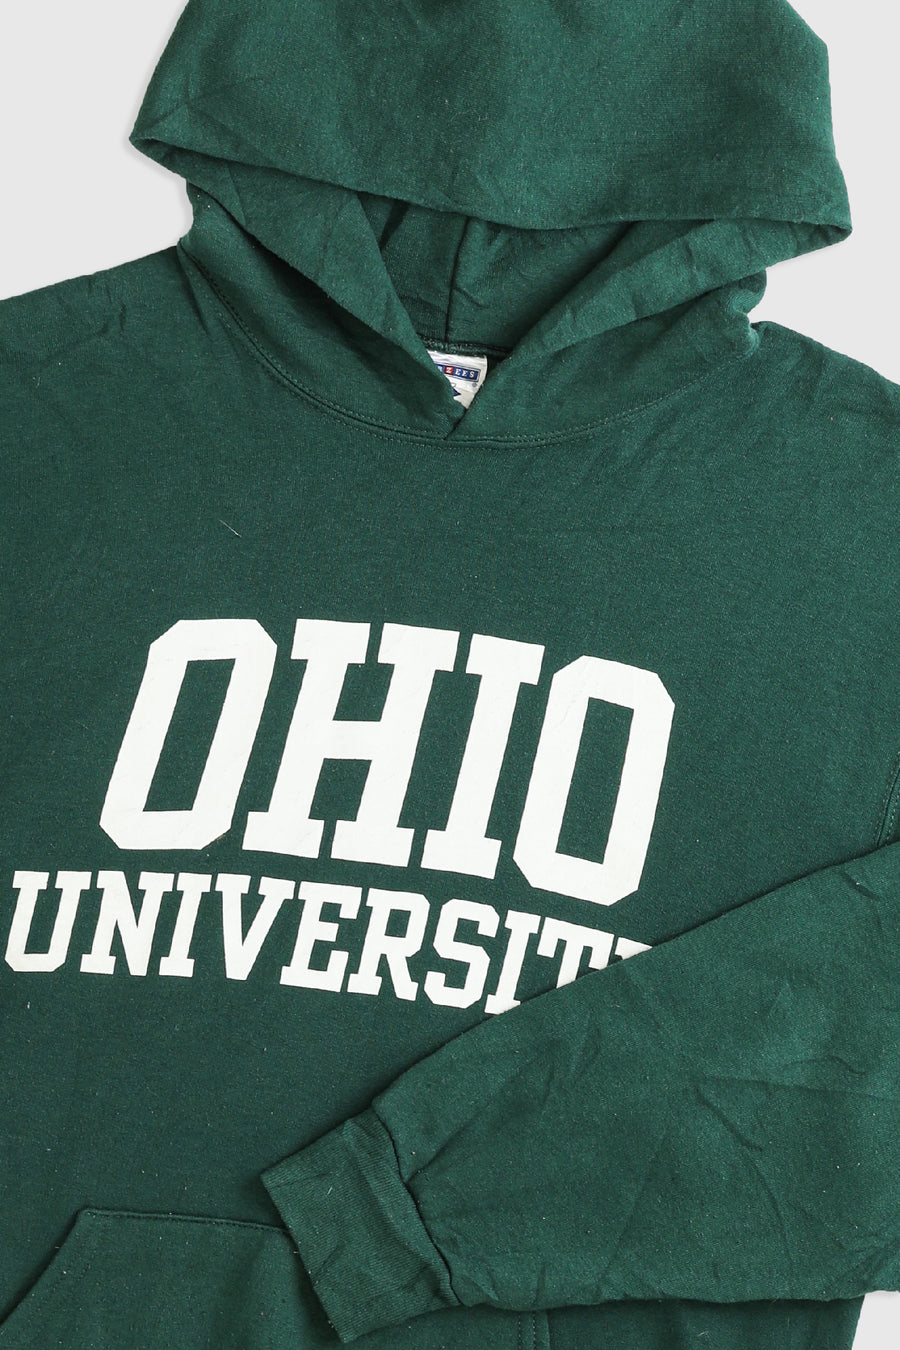 Vintage Ohio University Sweatshirt